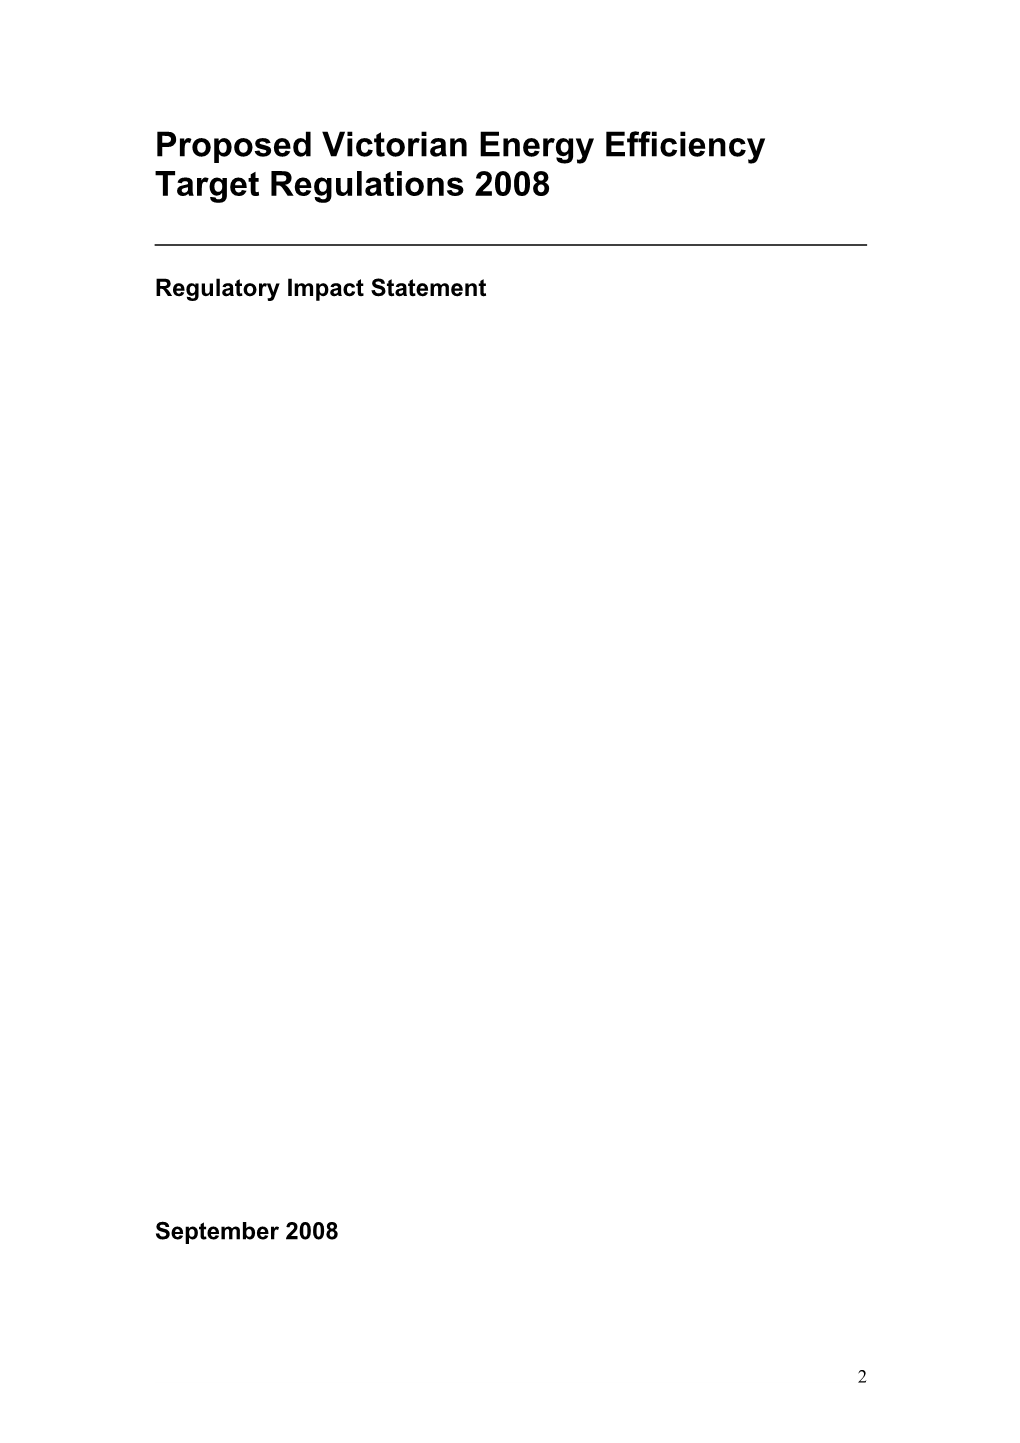 Victorian Energy Efficiency Target Scheme - Regulatory Impact Statement